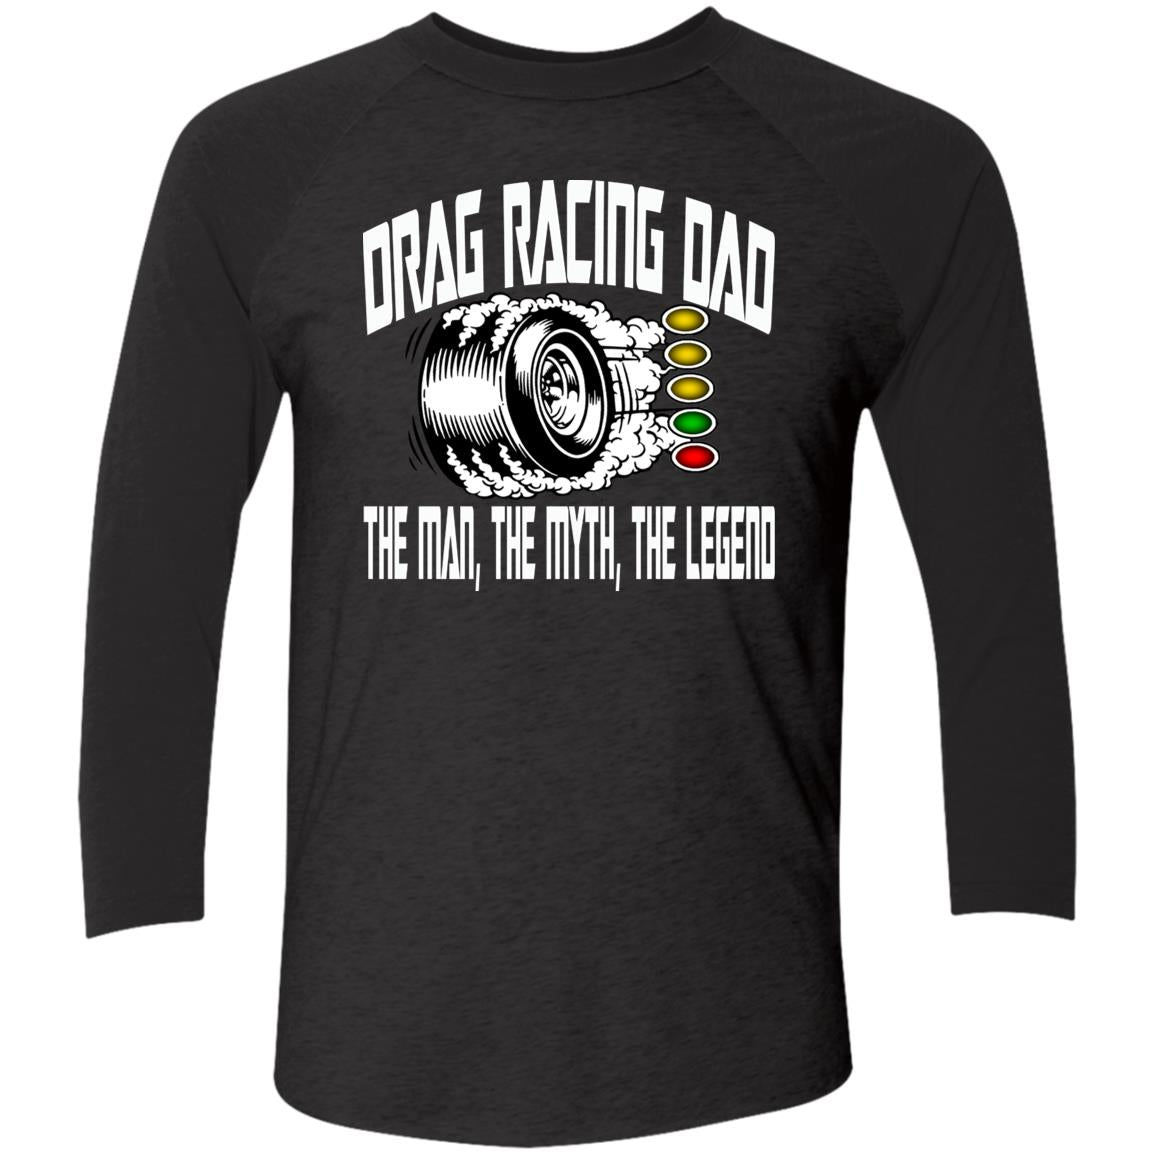 Drag Racing Dad Tri-Blend 3/4 Sleeve Raglan T-Shirt